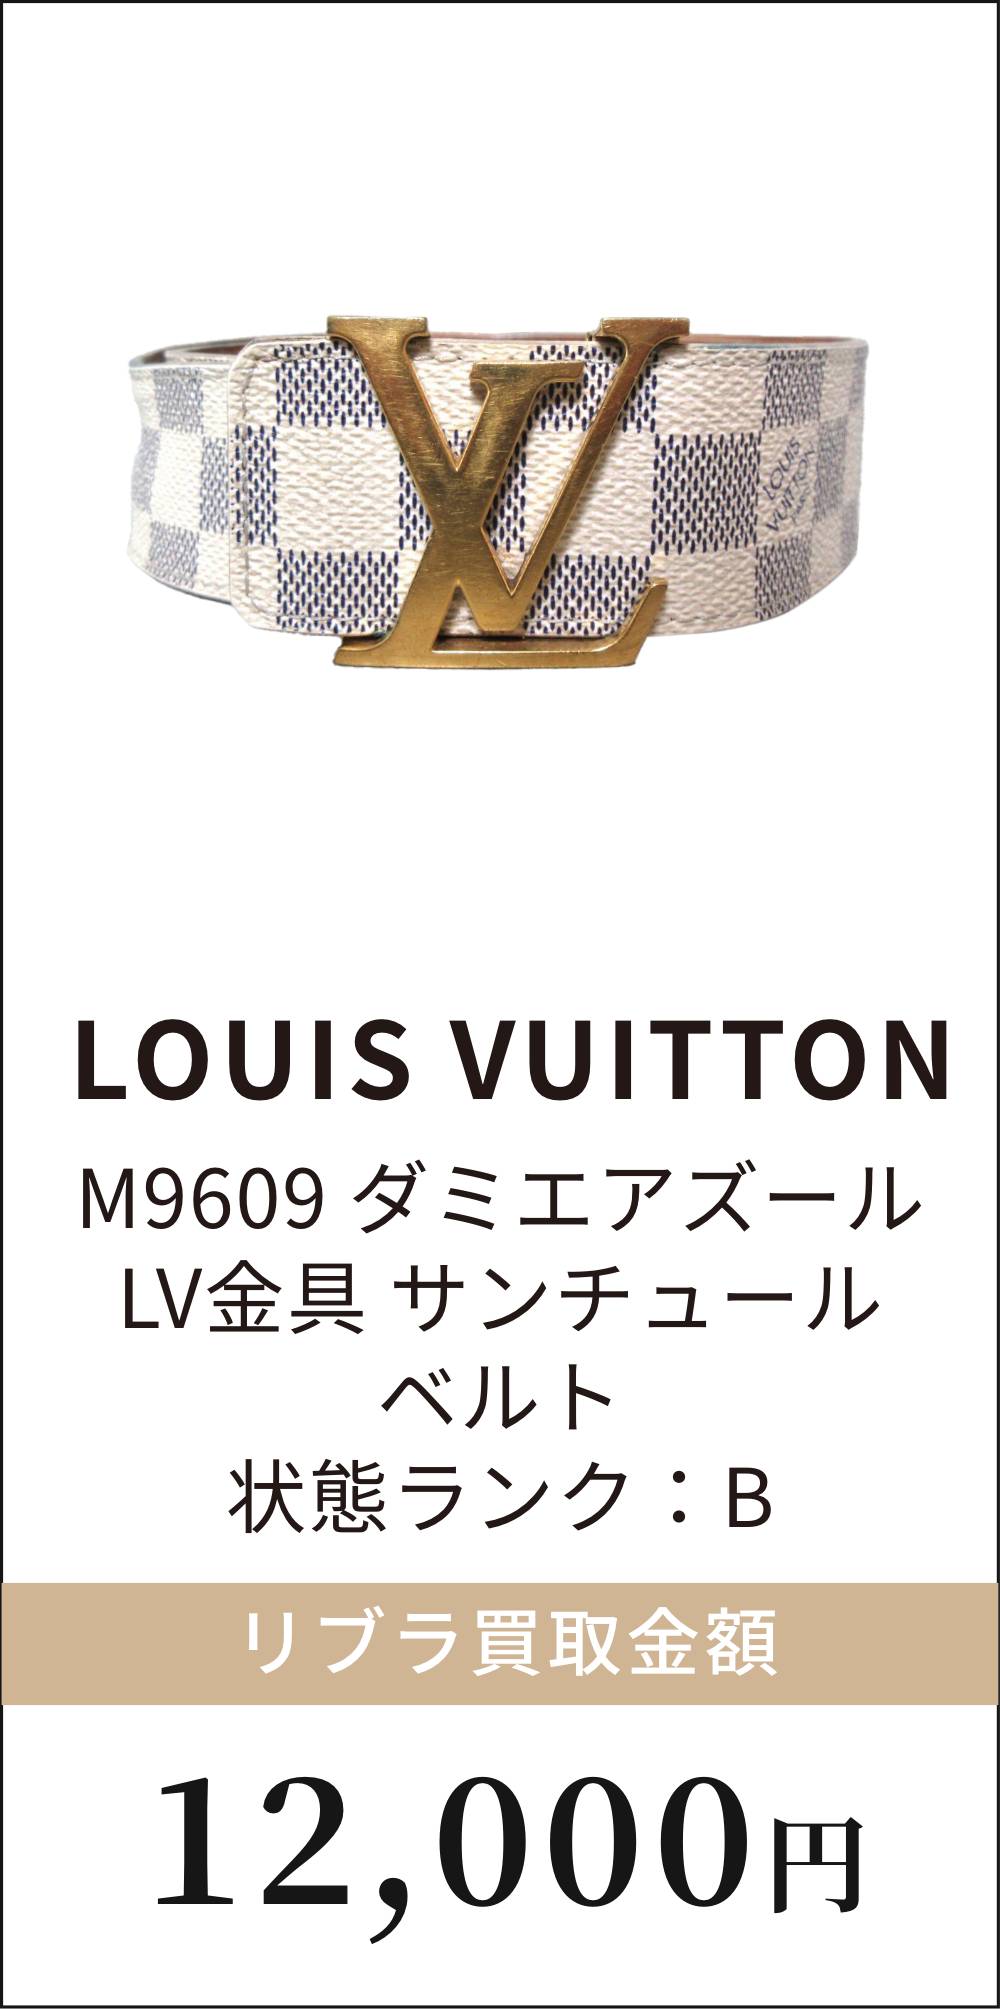 LOUIS VUITTON M9609 ダミエアズールLV金具 サンチュールベルト